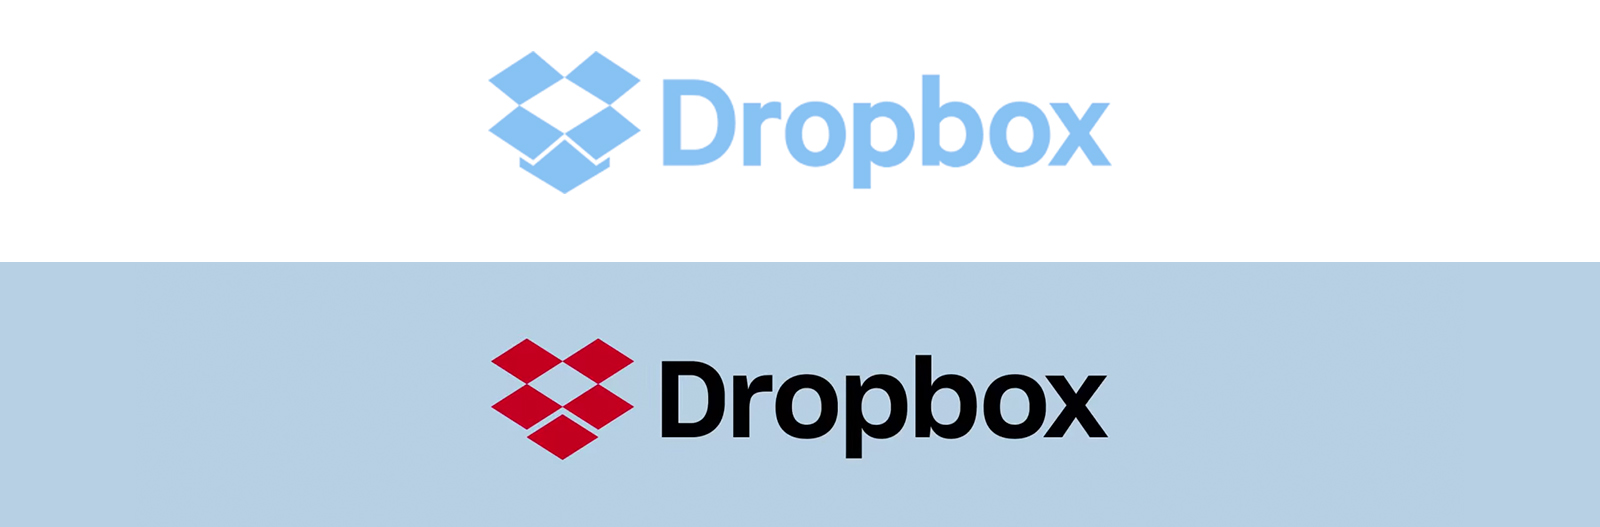 dropbox-old-new